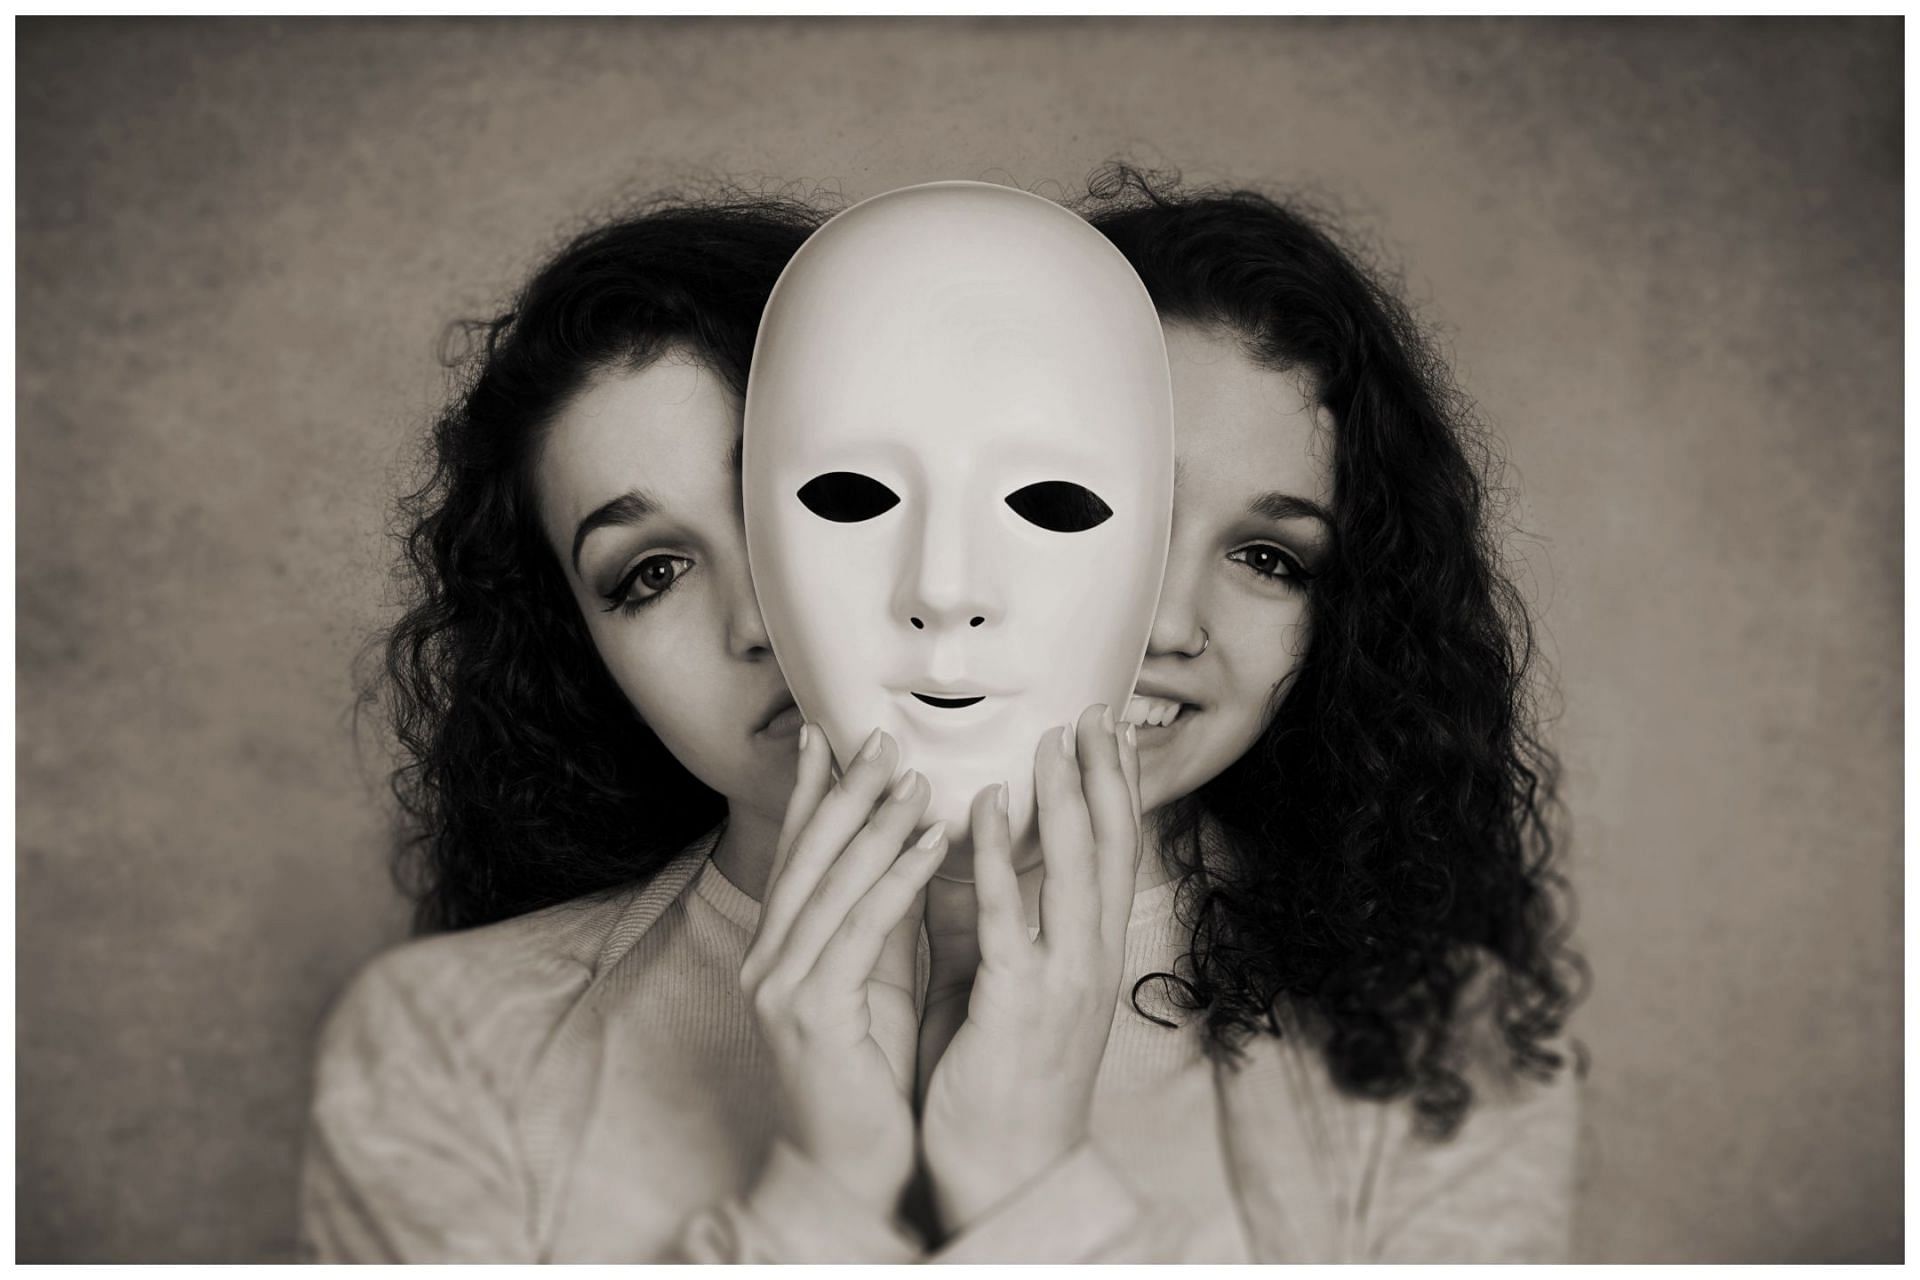 Hollow mask illusion can detect schizophrenia (Image via Vecteezy/Axel Bueckert)